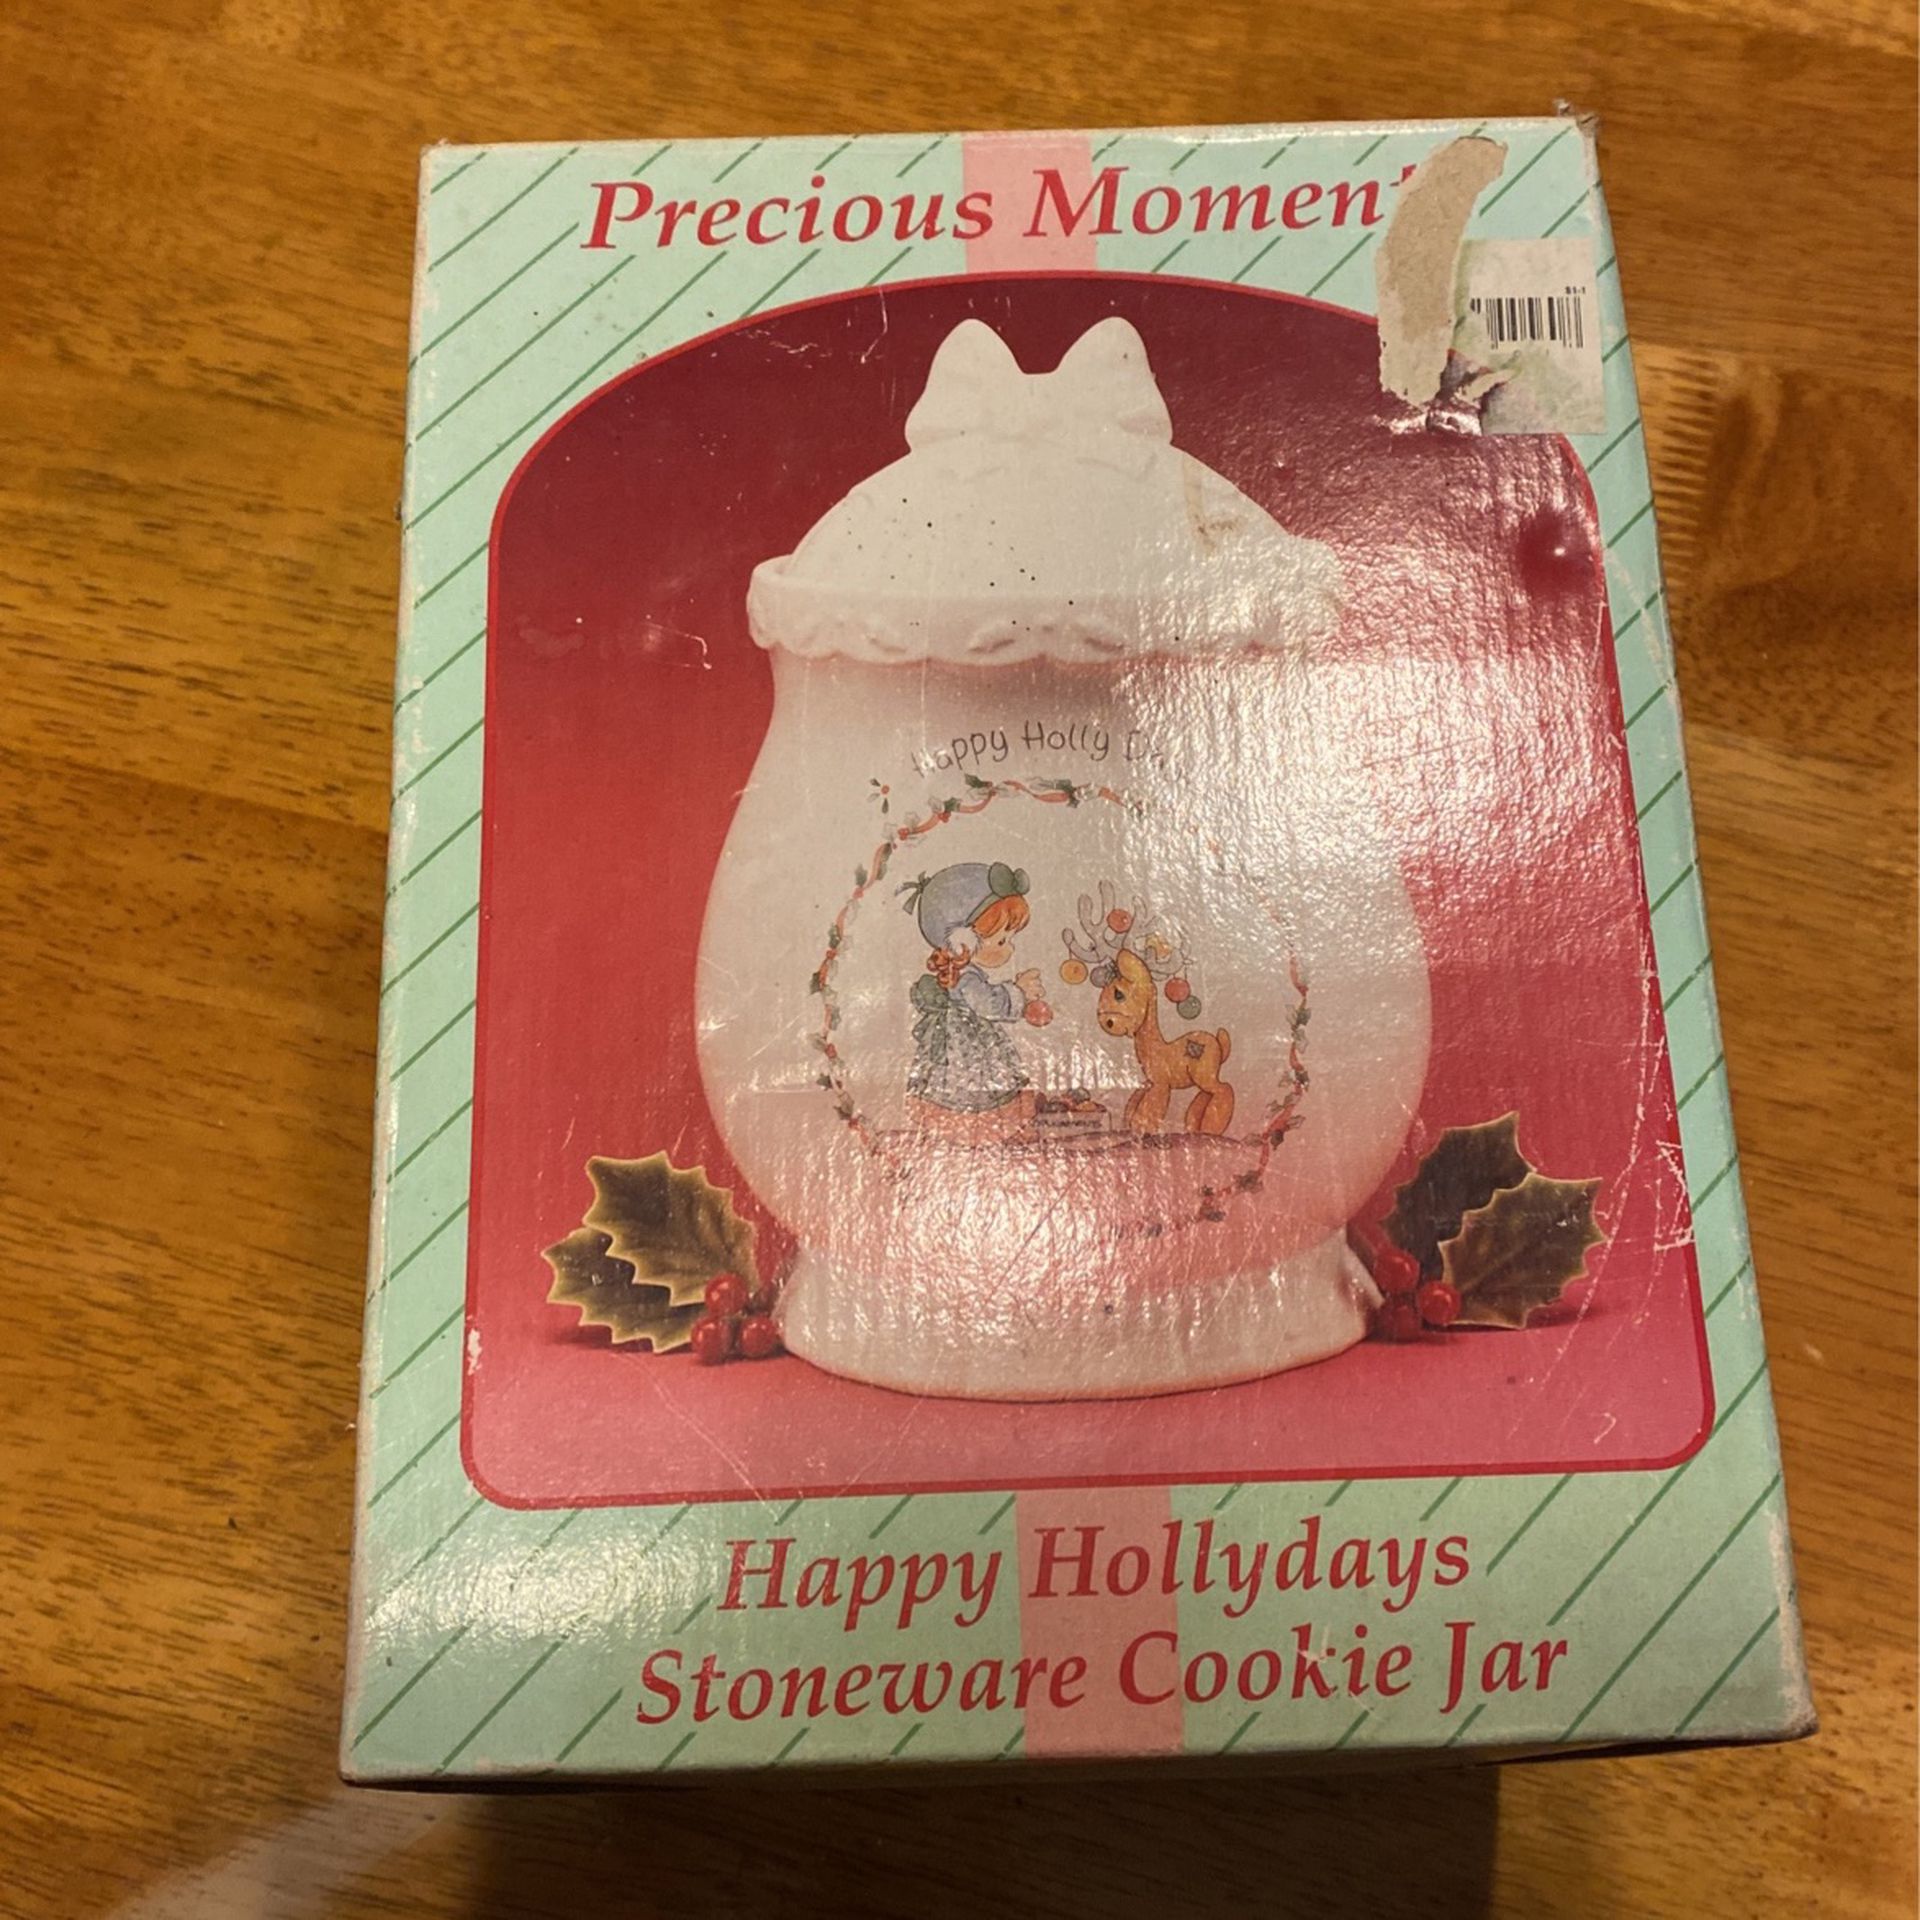 Precious moments Cookie Jar $10